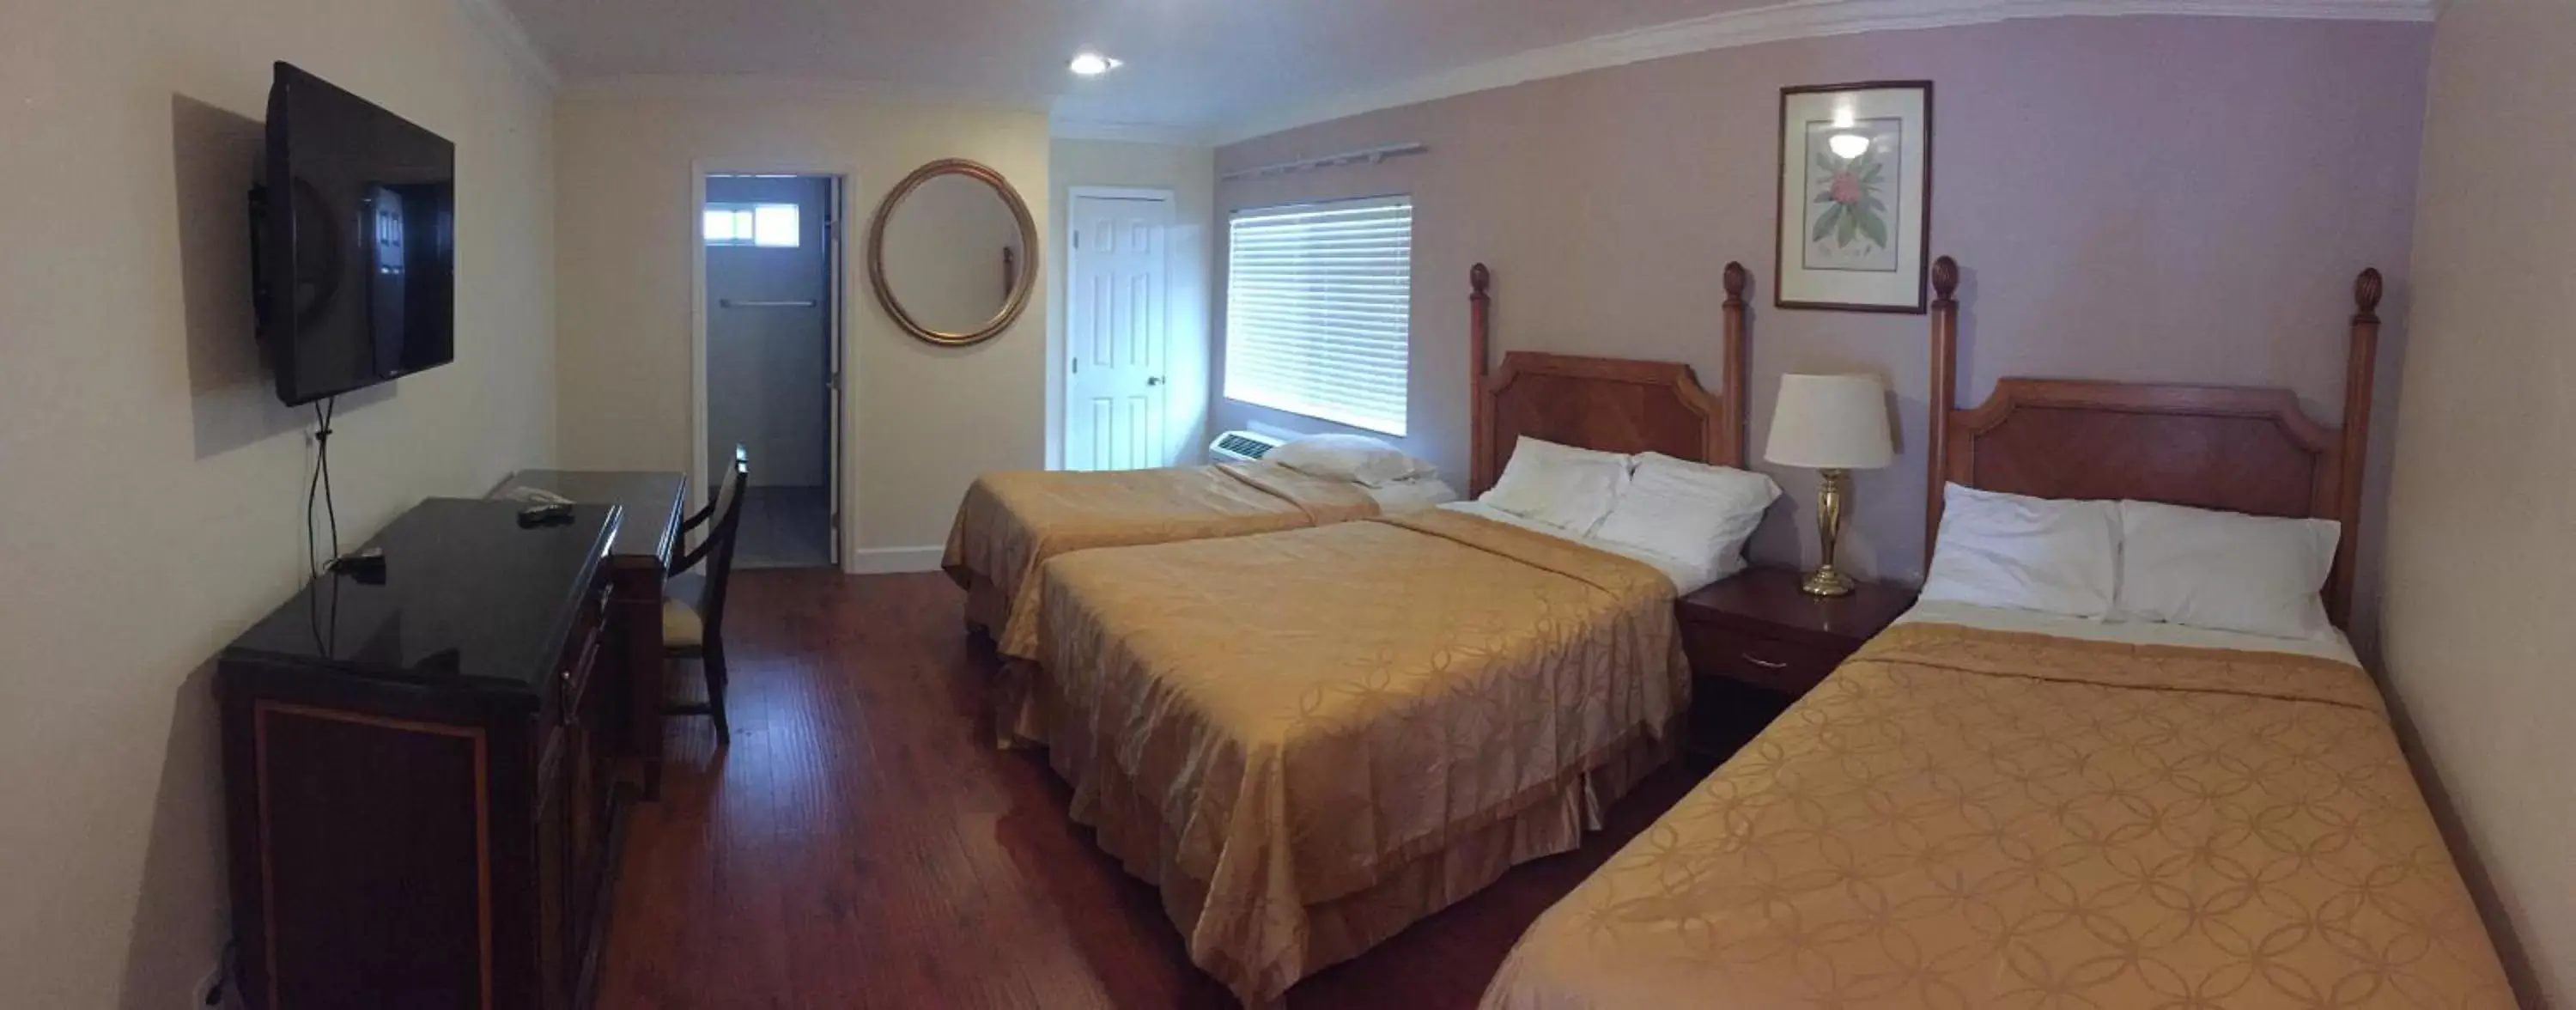 Bedroom, Bed in Wagon Wheel Motel